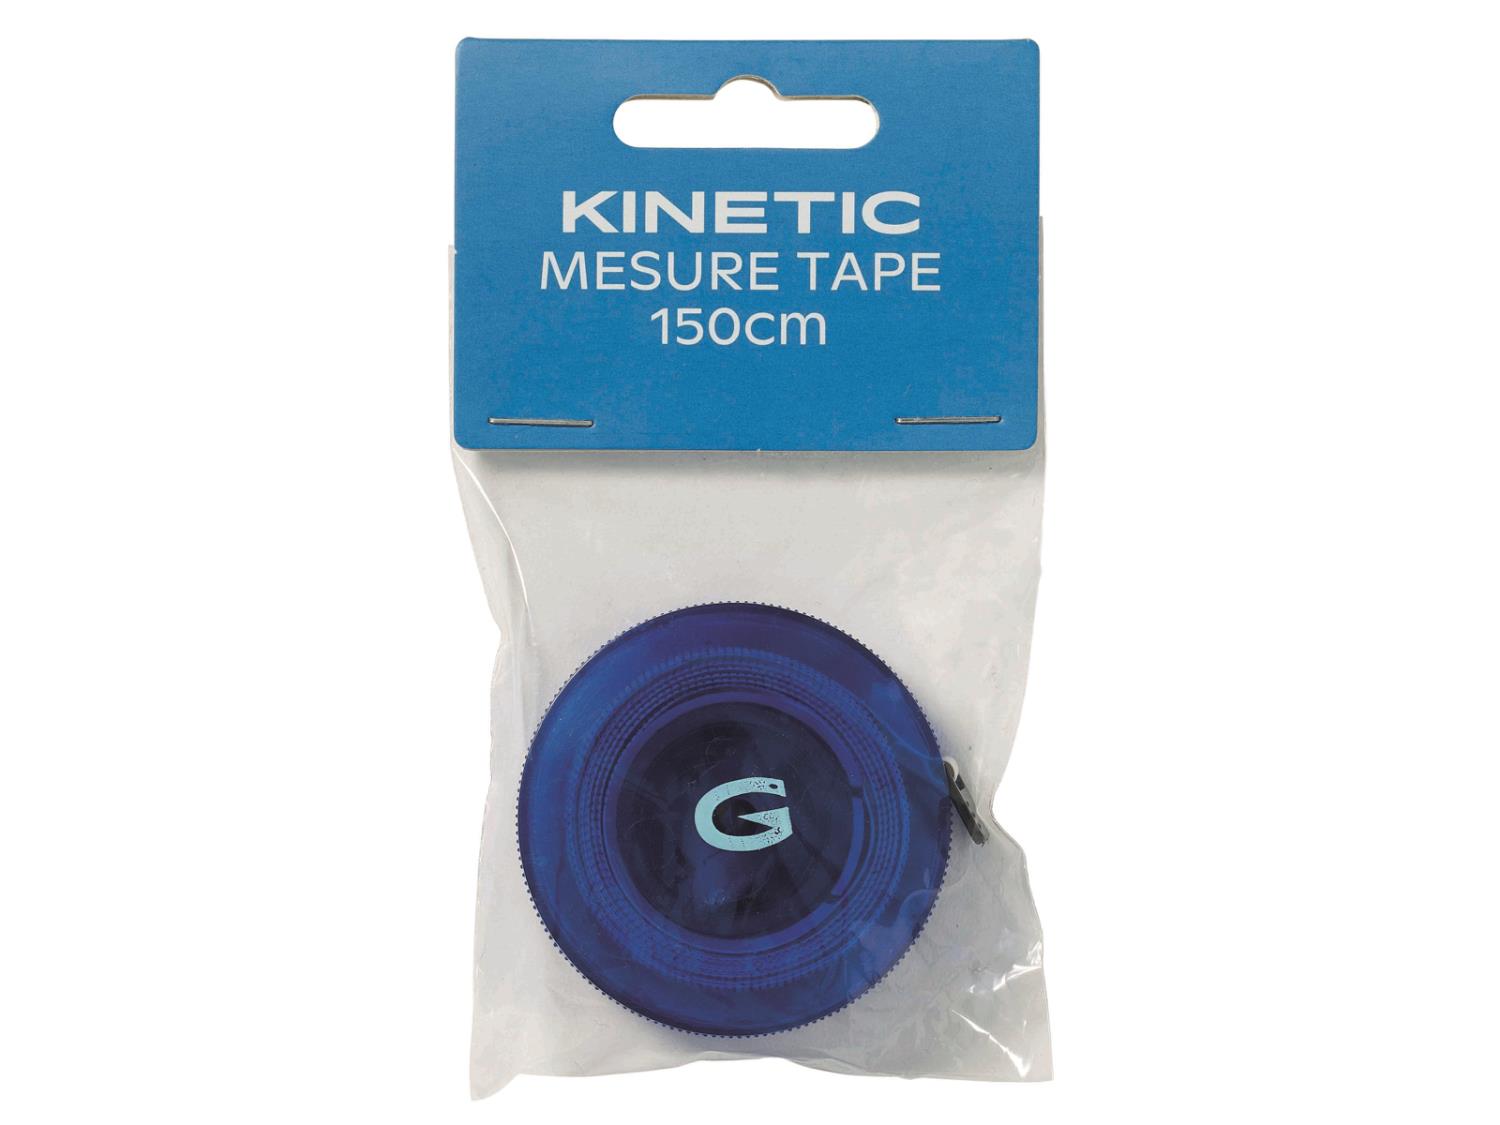 Kinetic measuring tape